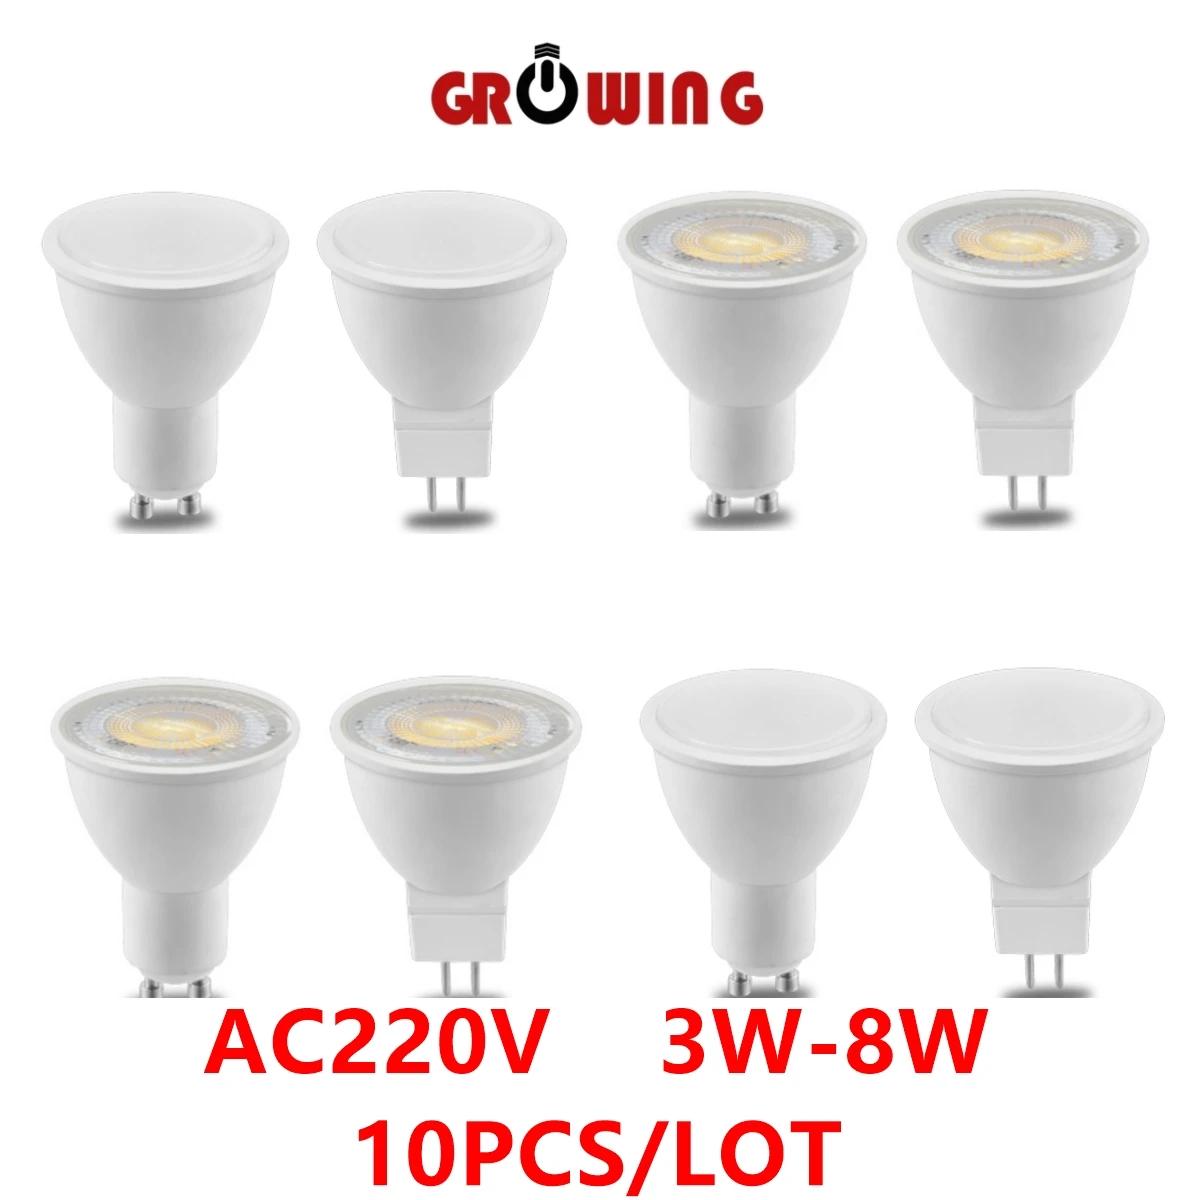 

Spot Foco Gu10 GU5.3 Spotlight Warm White Daylight Cold White AC220V LED Light Lamp For Home Decoration Replace Halogen Lamp